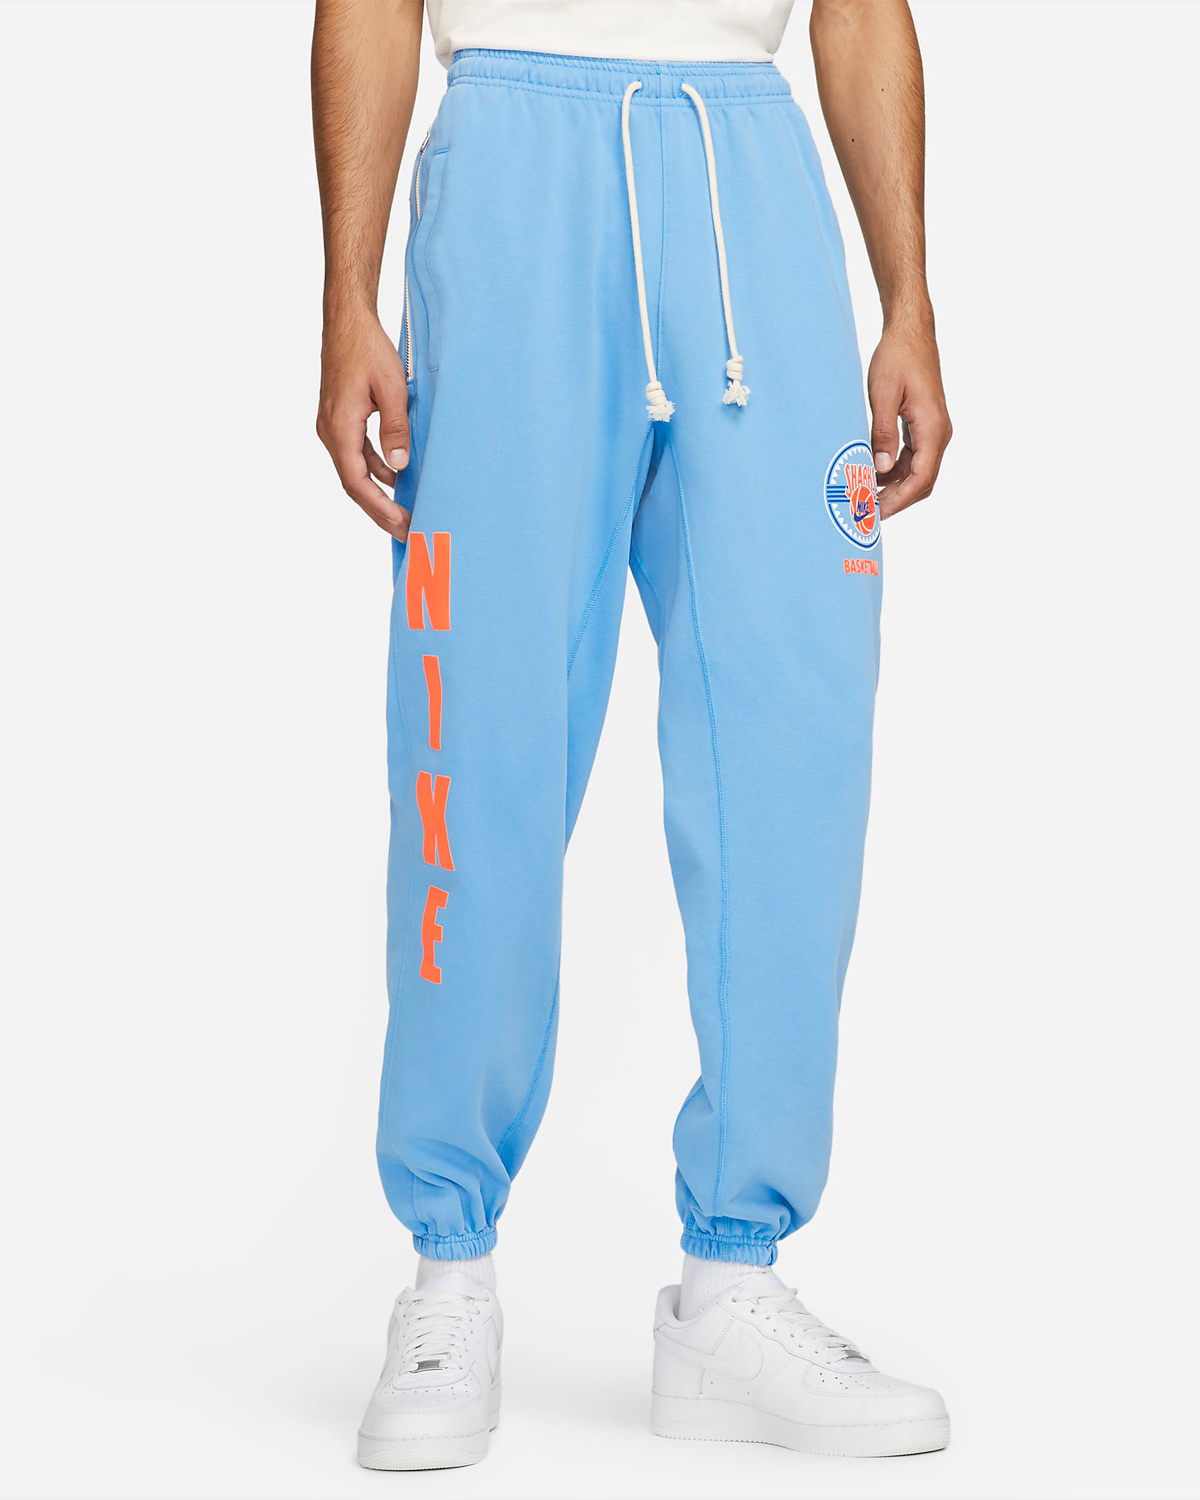 Nike-Standard-Issue-Sharks-Pants-University-Blue-1